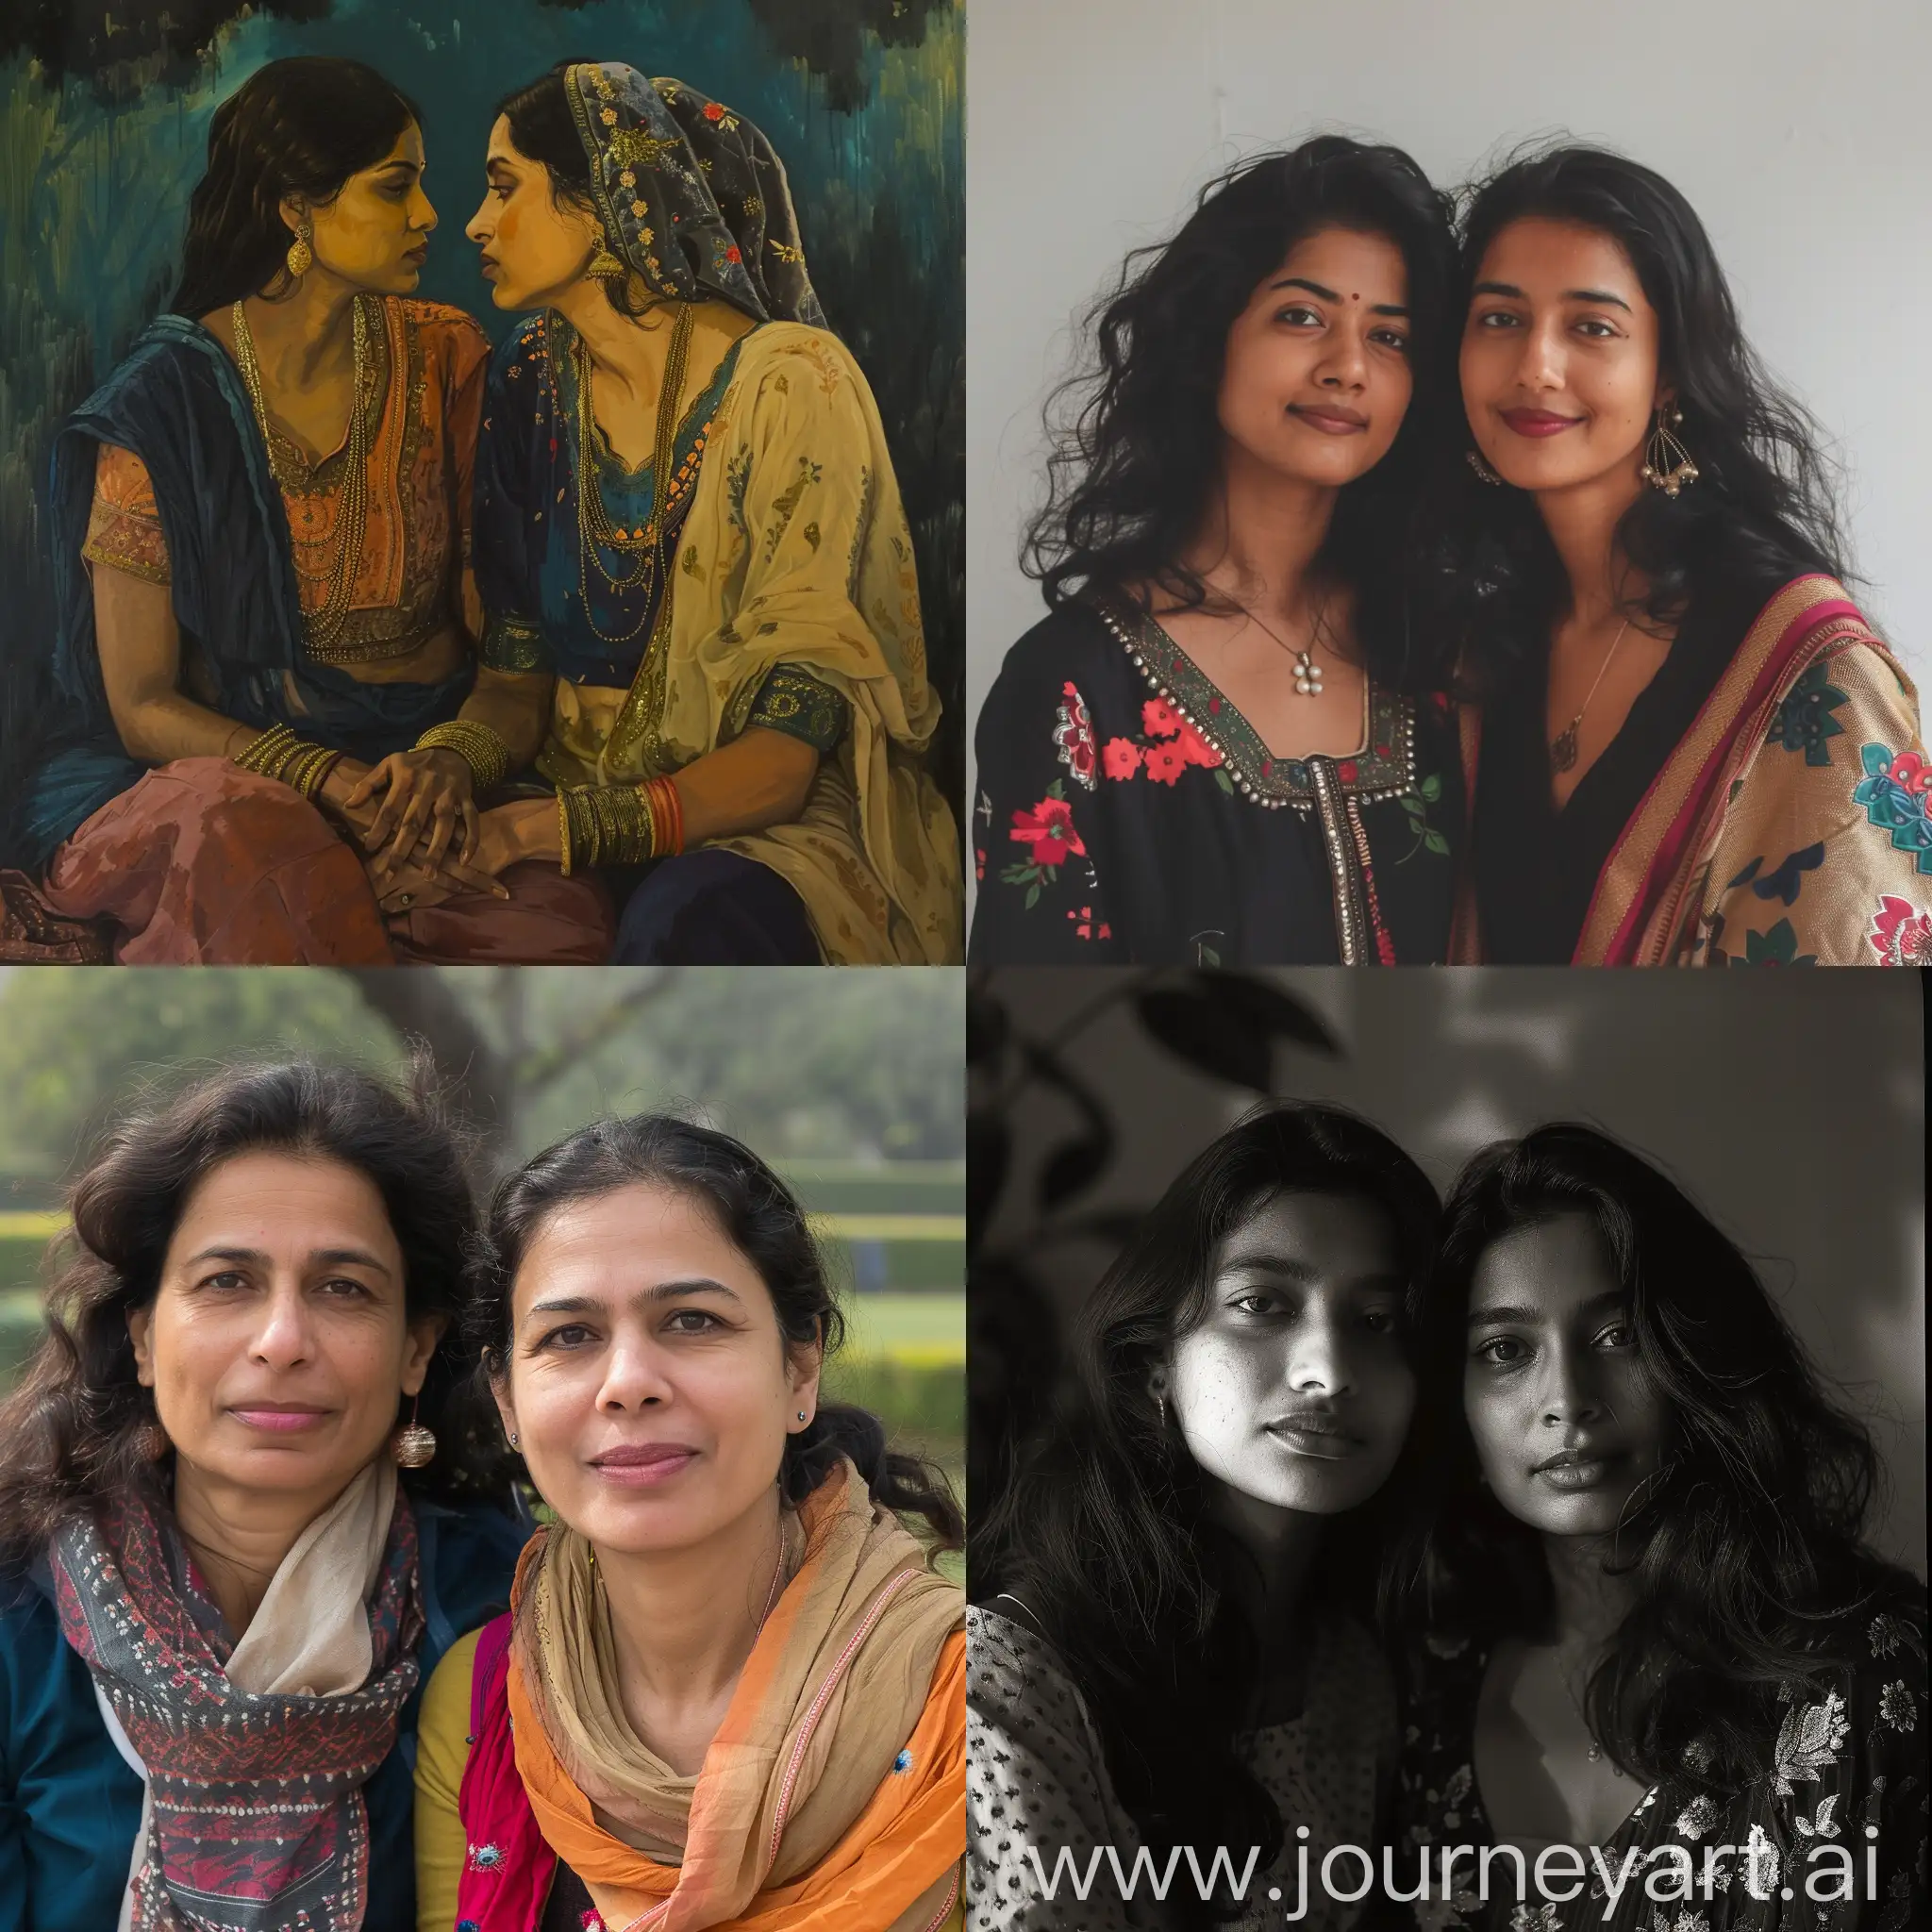 Amrita-Shergil-Portraits-Captivating-Women-in-Vivid-Artistic-Expression